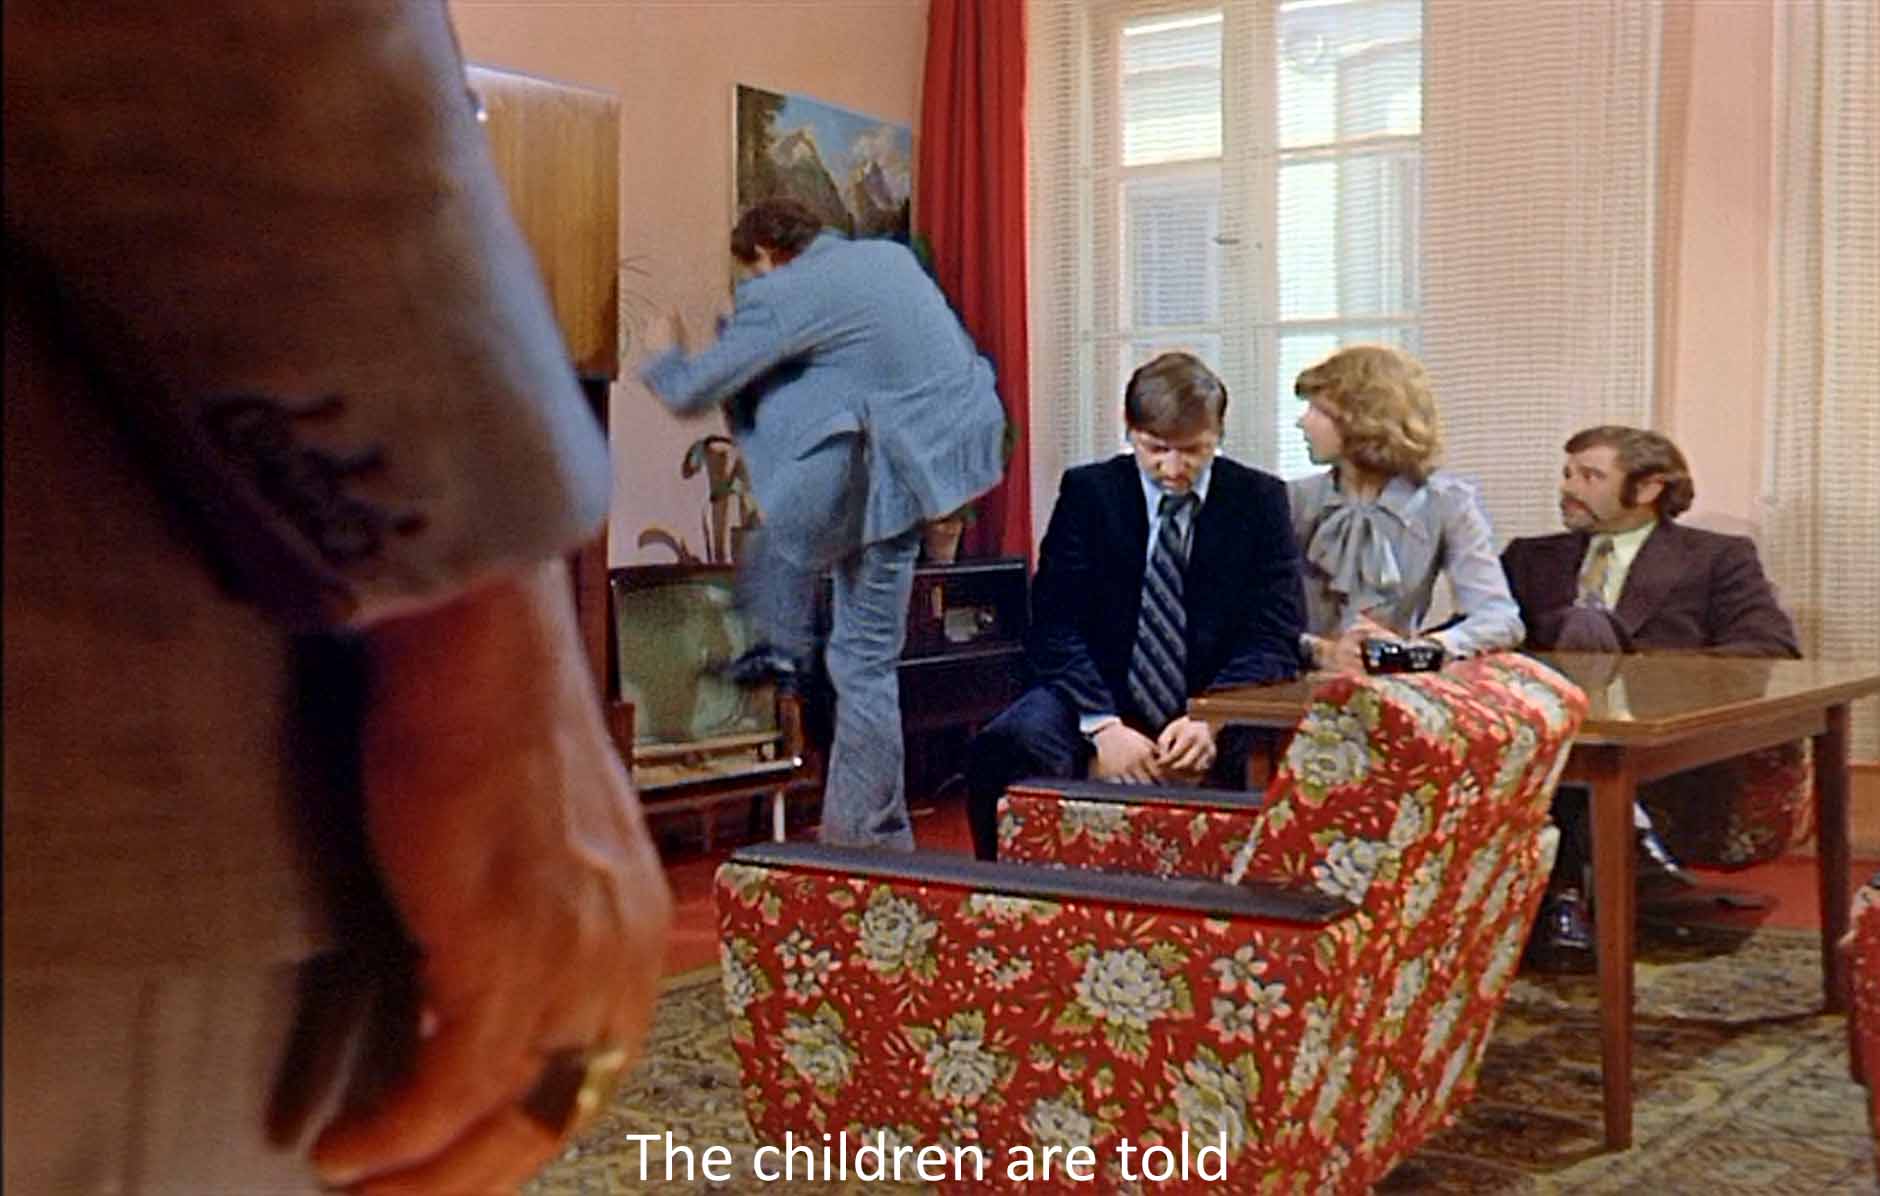 The children are told